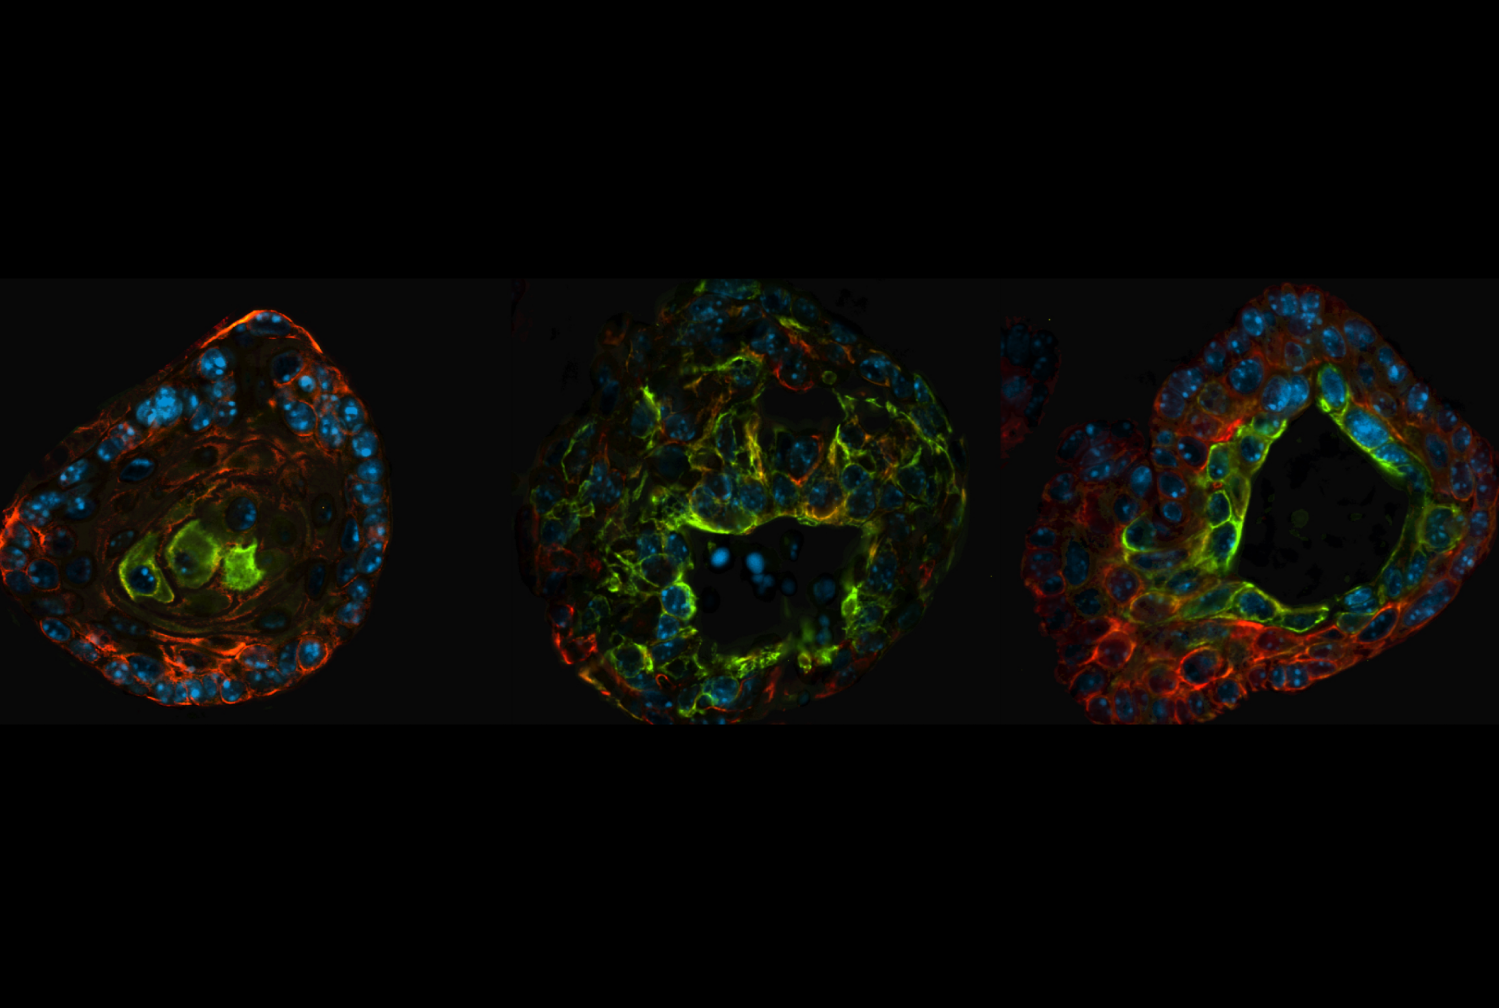 Prostate organoids from genetically engineered mouse models. Image credit: Mirjam Blattner and Dennis Huang